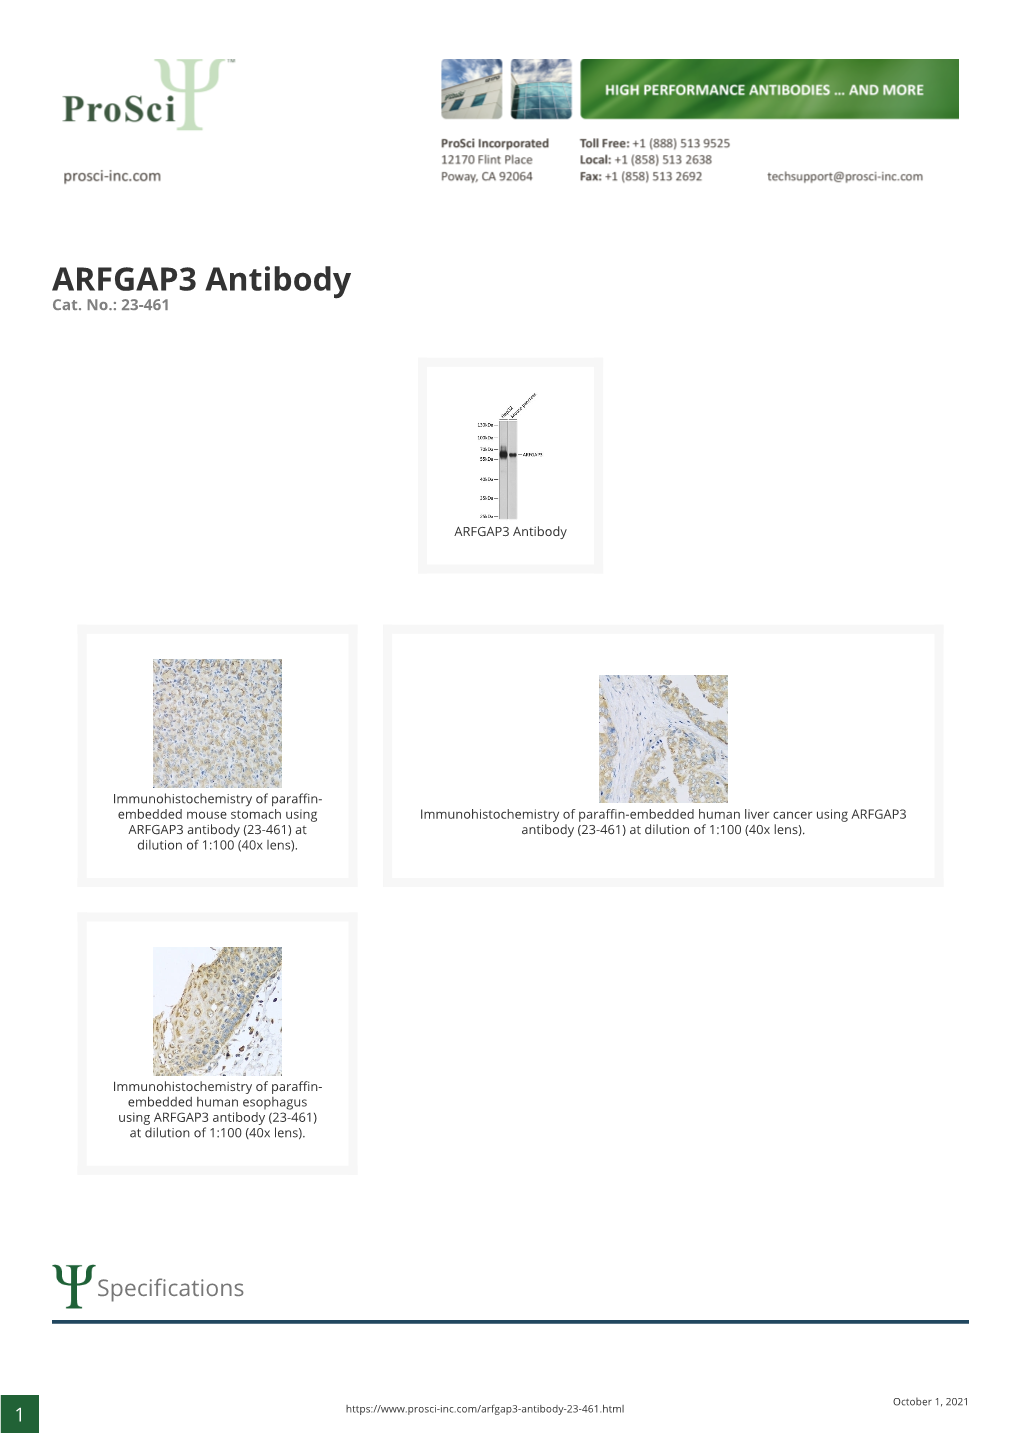 ARFGAP3 Antibody Cat